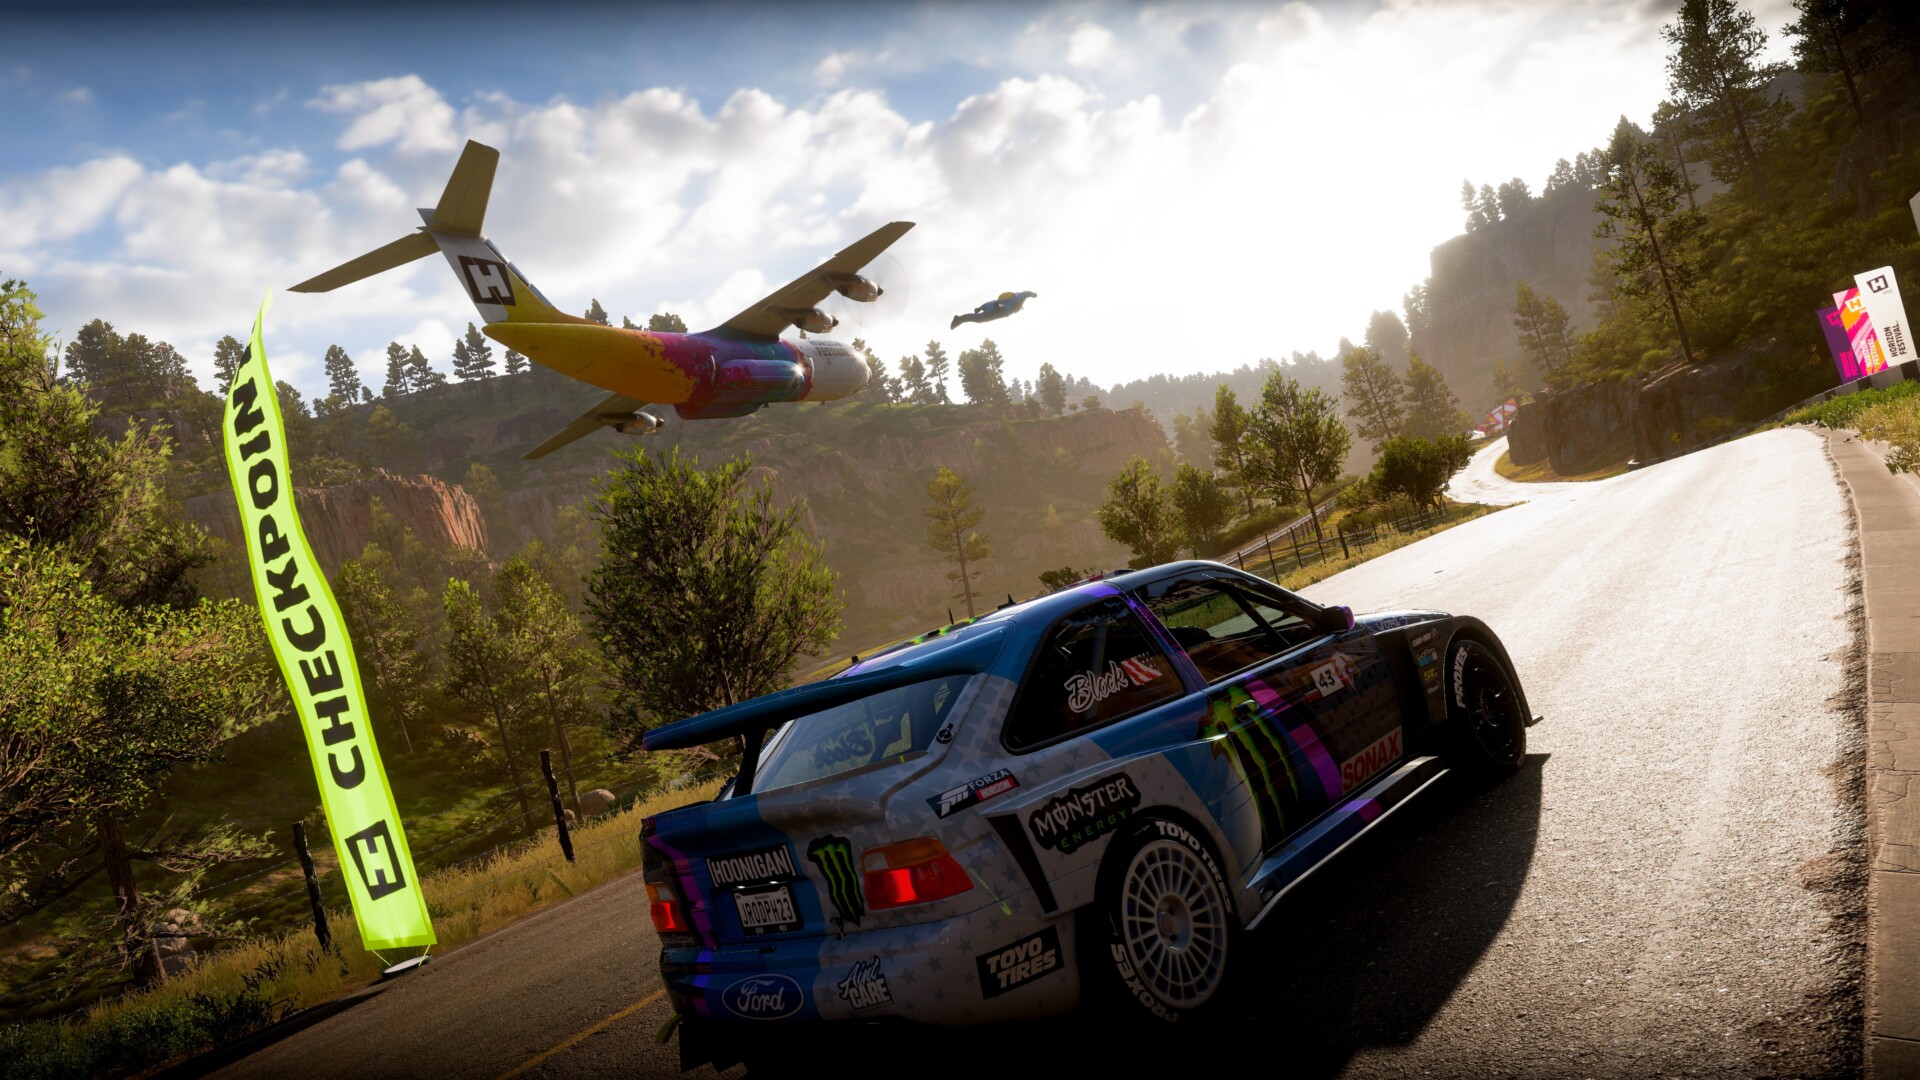 Forza Horizon 5: Everything We Know - GameSpot